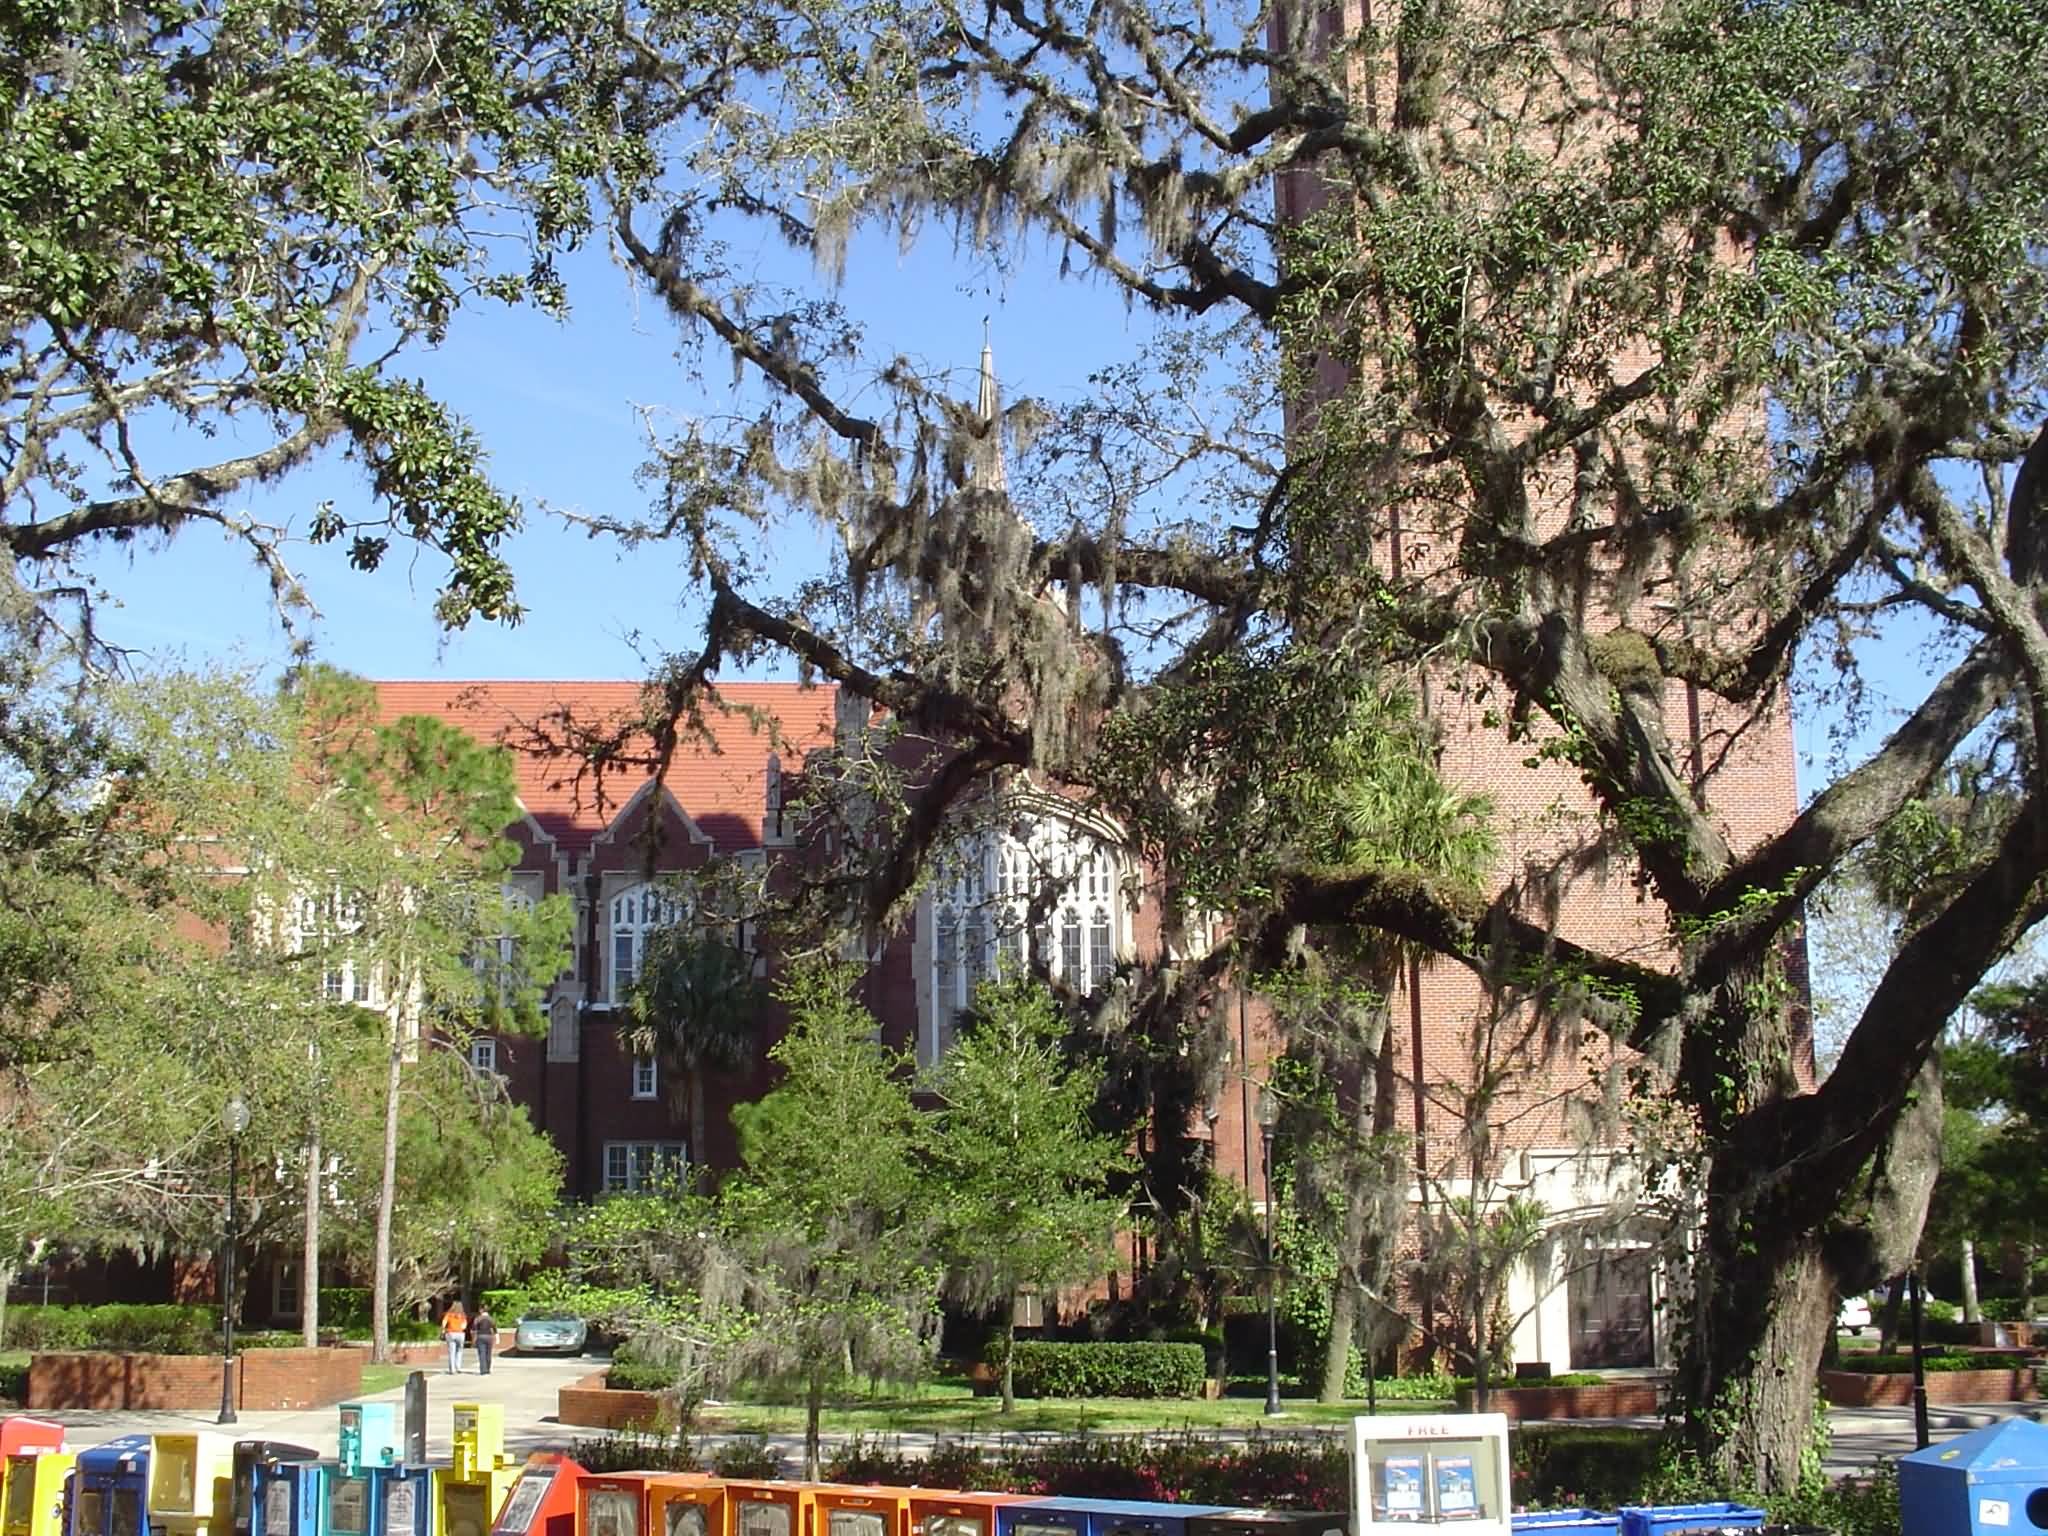 University of Florida campus